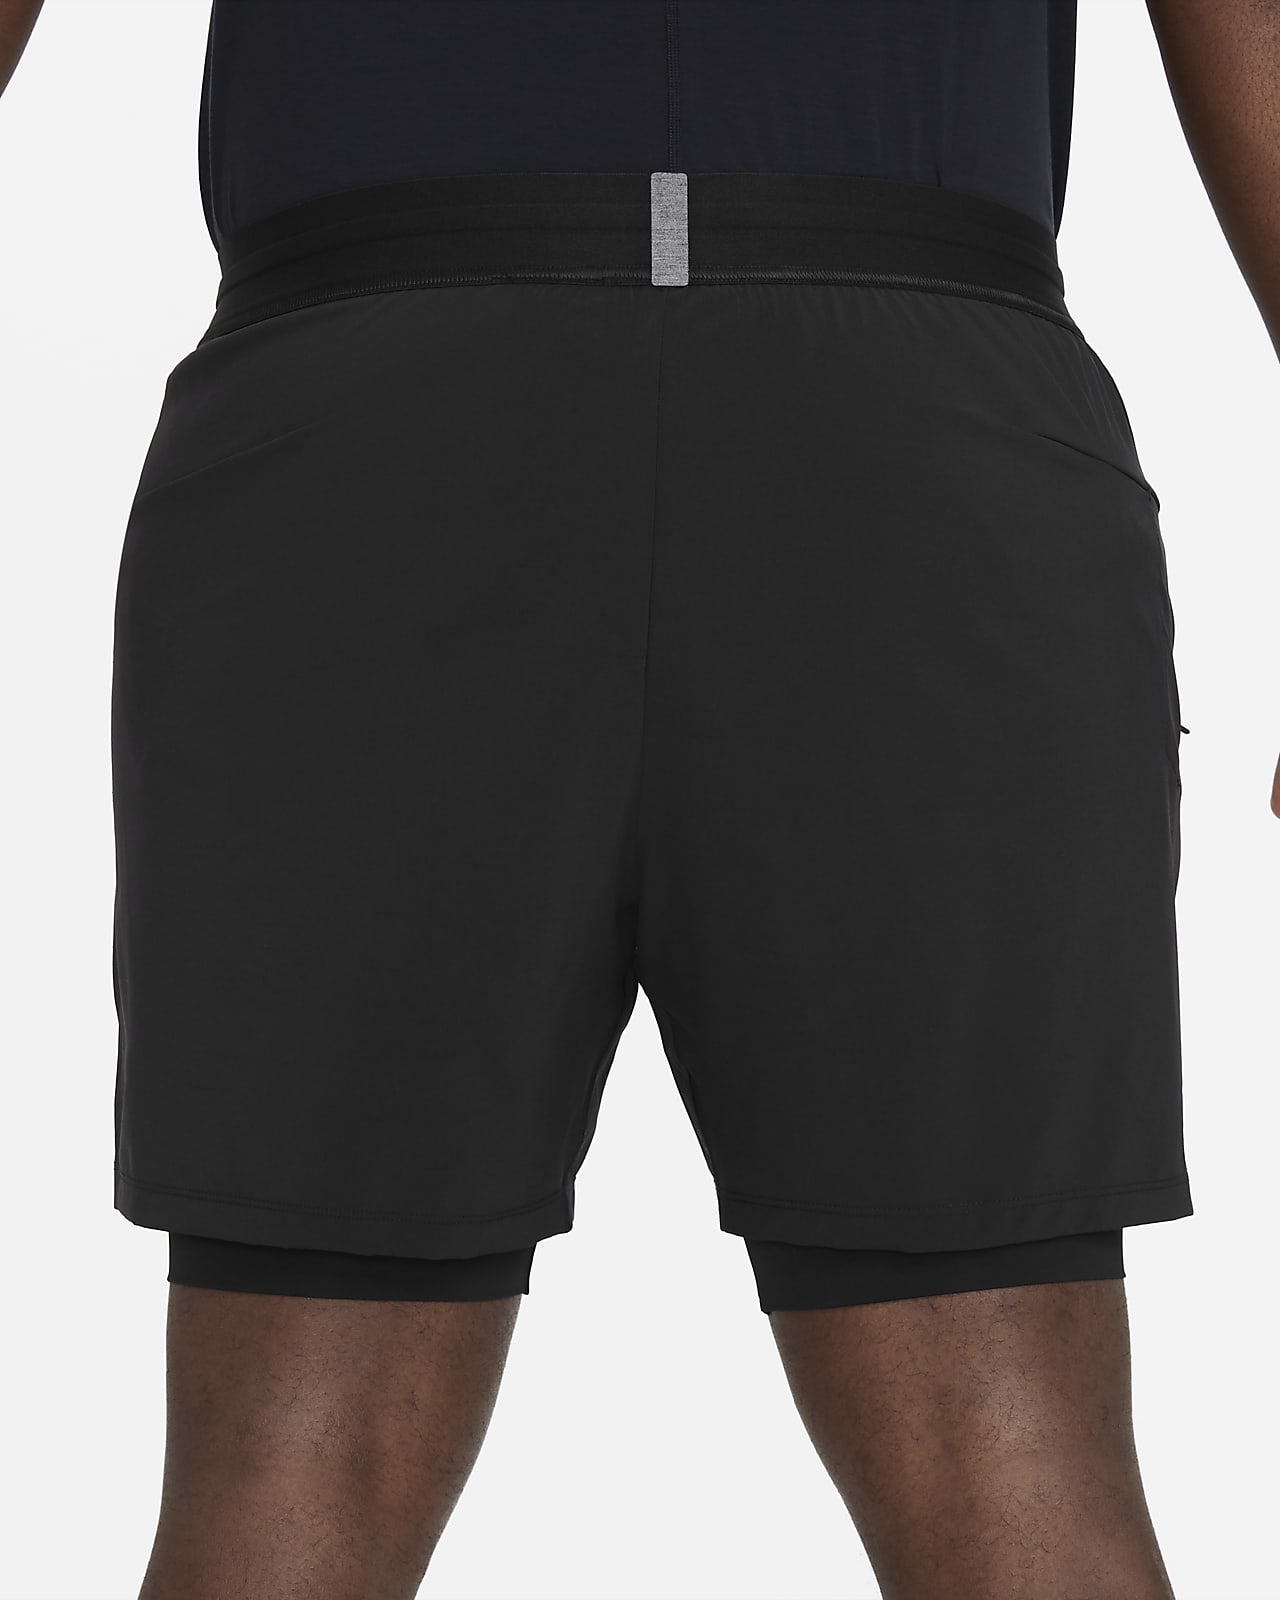 Nike Yoga Shorts - Ultimate Comfort and Flexibility